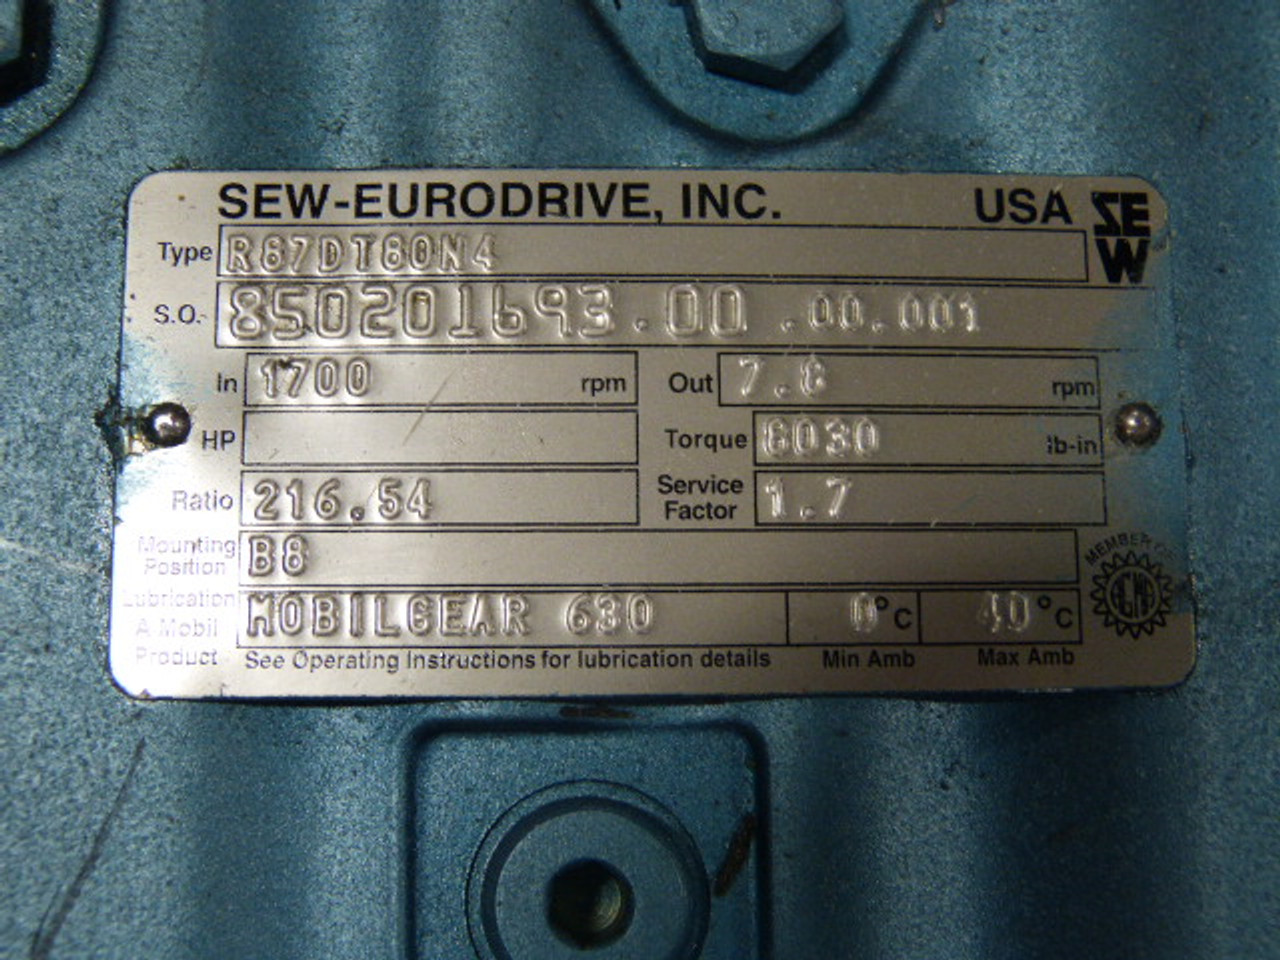 Sew-Eurodrive 1HP 1700RPM 330/575V TEFC 3Ph C/W Gear Box 216.54:1 Ratio USED